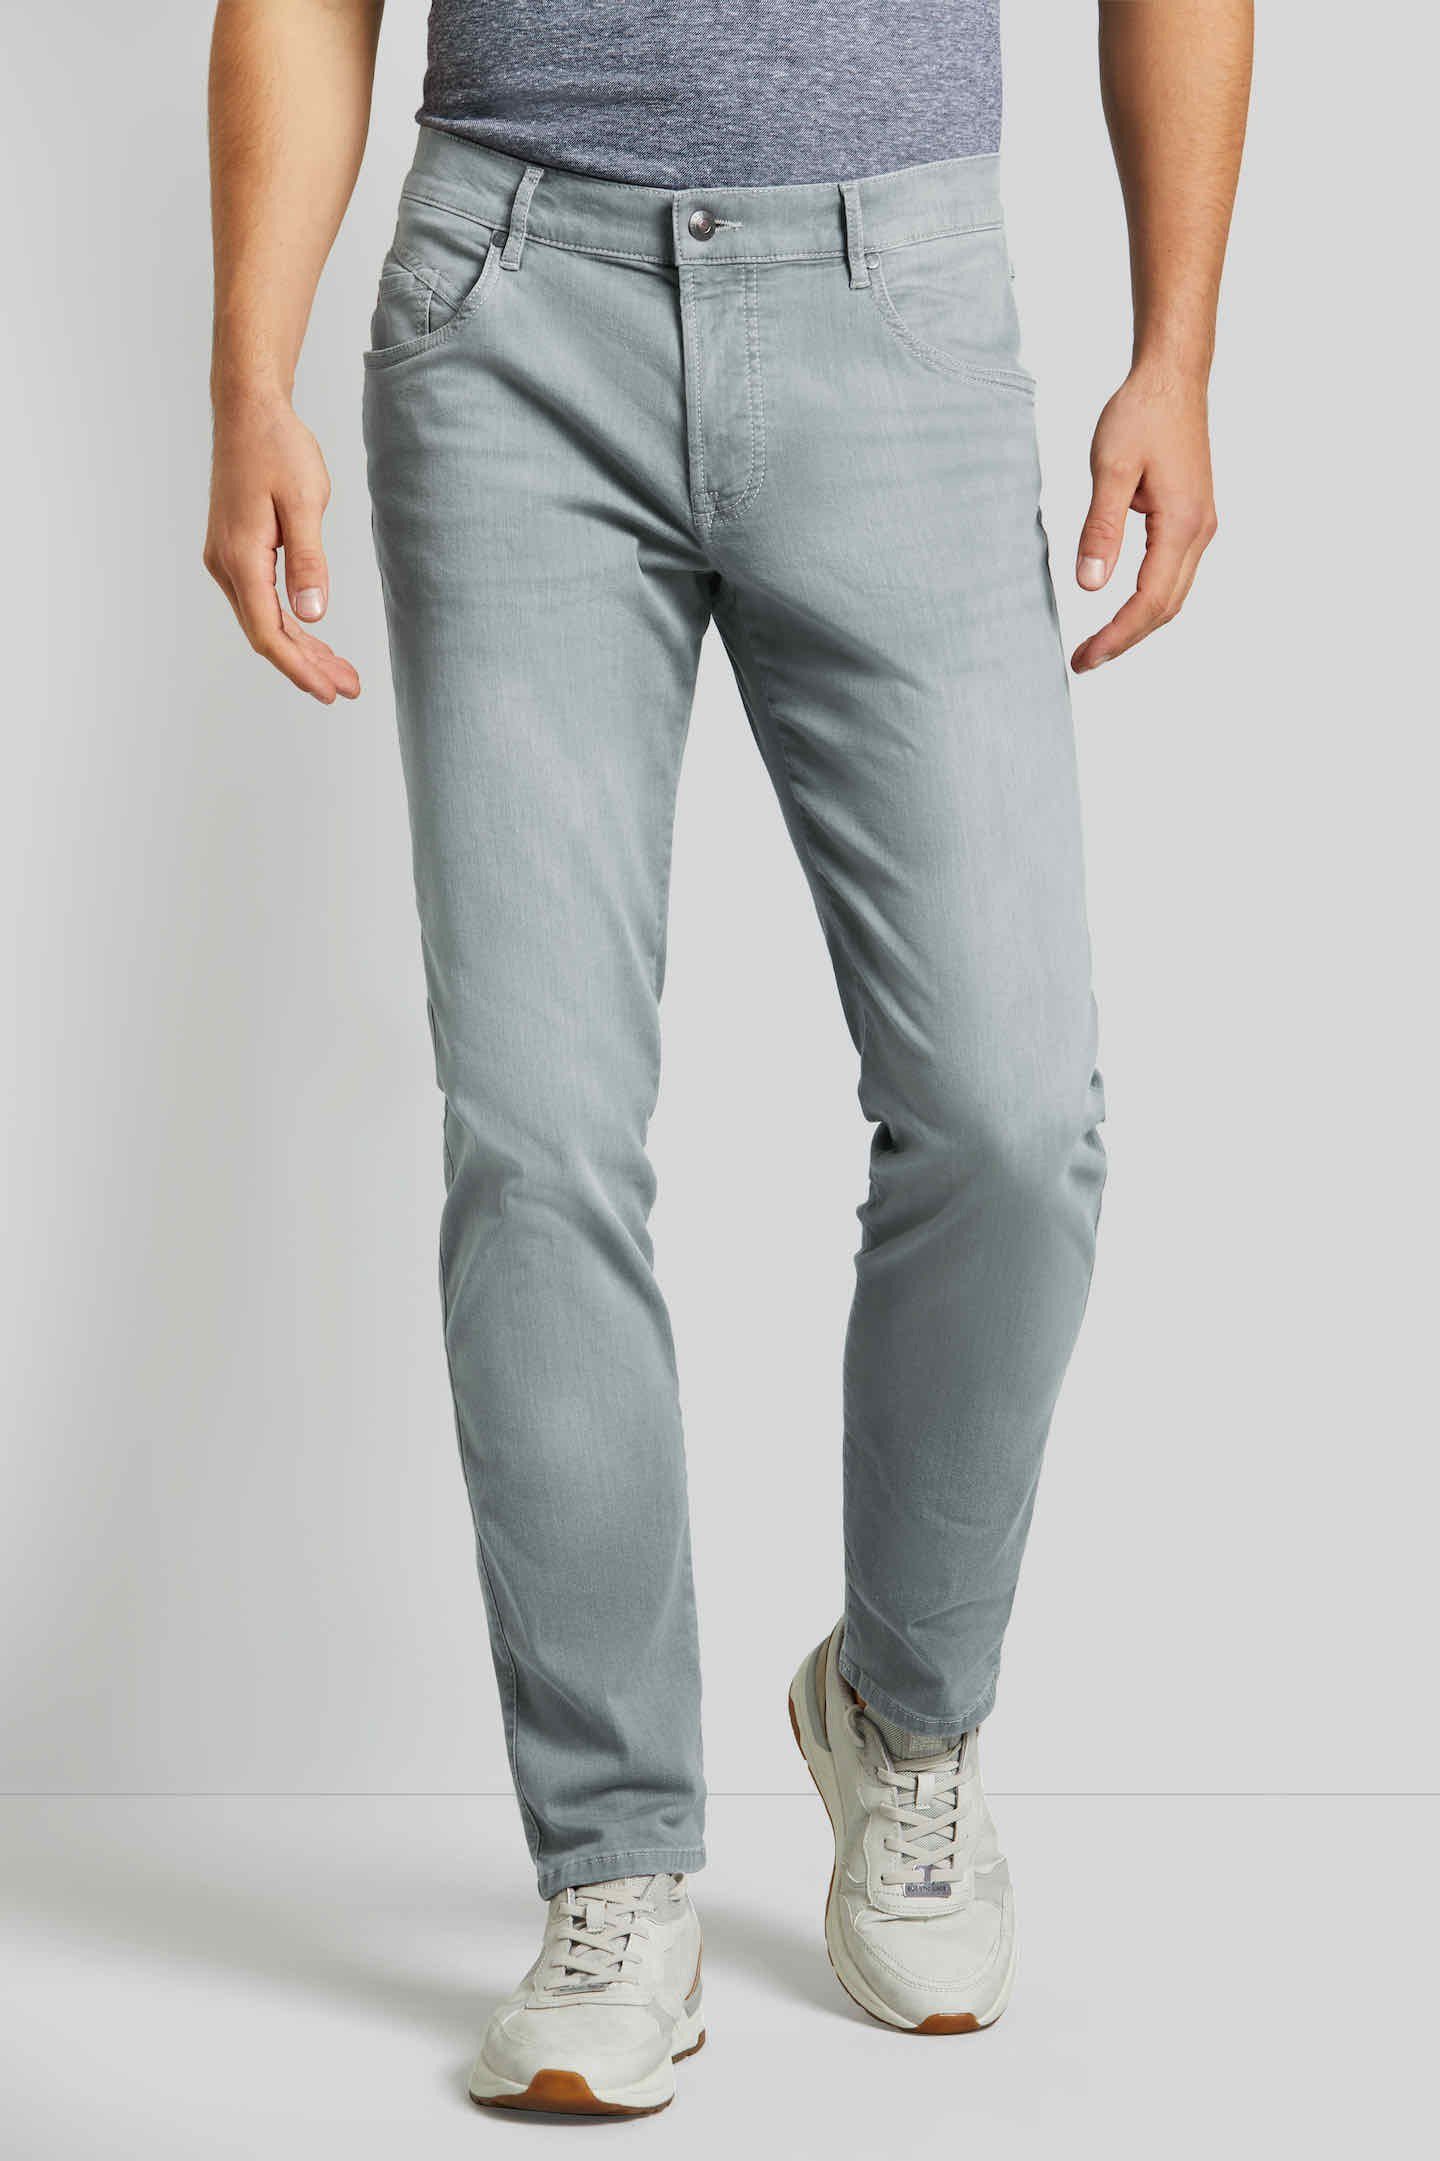 Used-Waschung bugatti grau mit 5-Pocket-Jeans